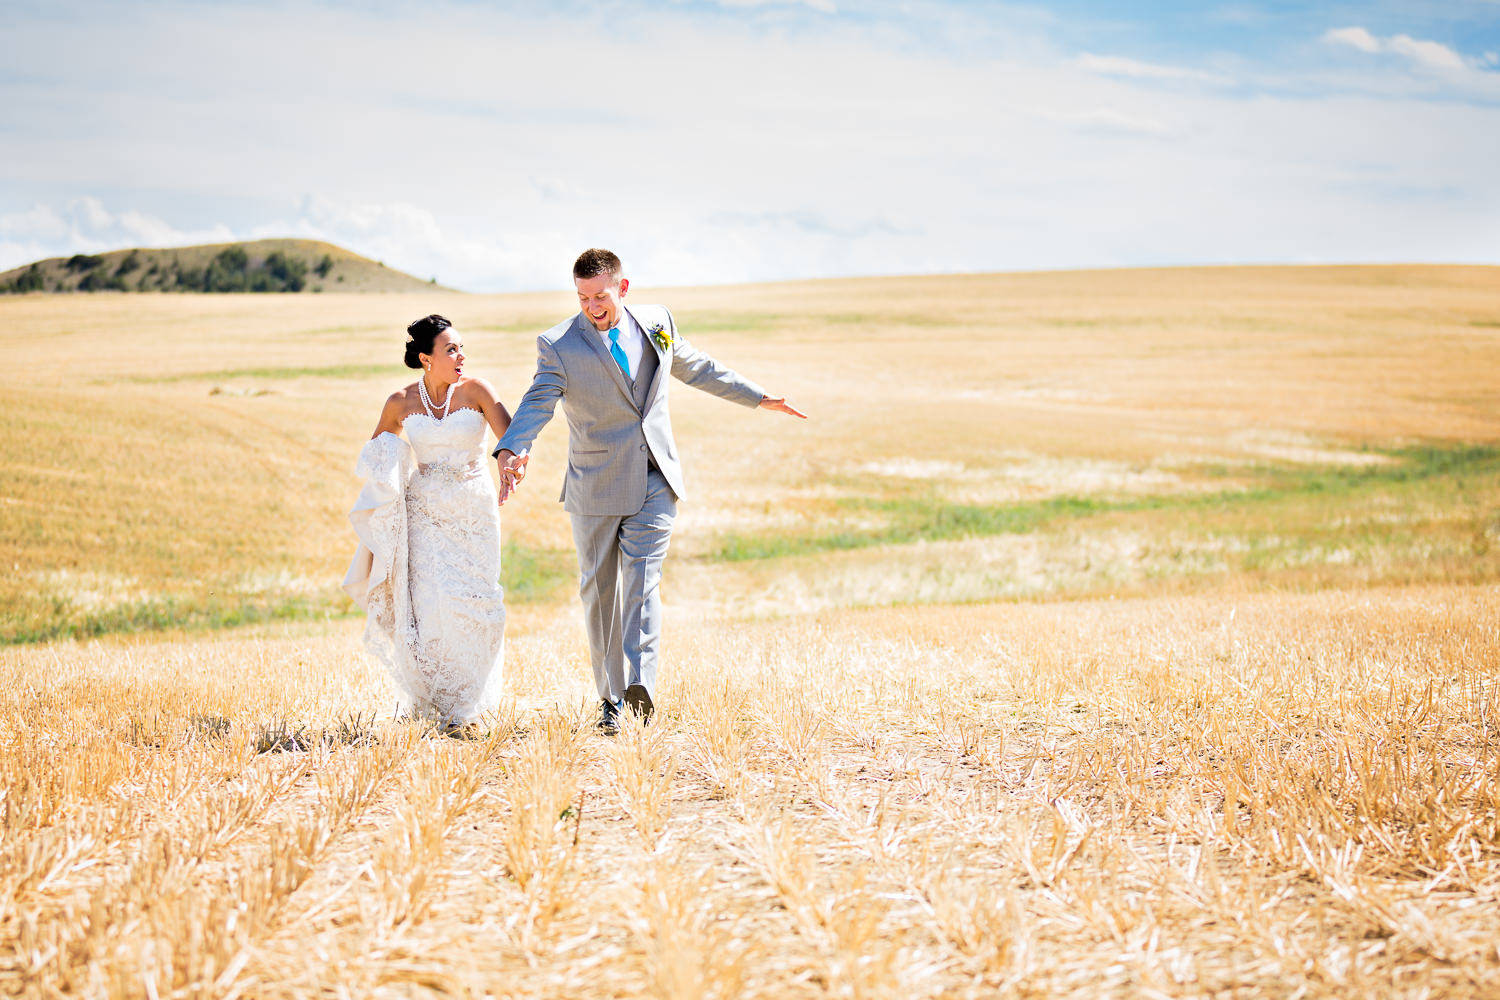 billings-montana-chanceys-wedding-first-look-bride-groom-running-away.jpg